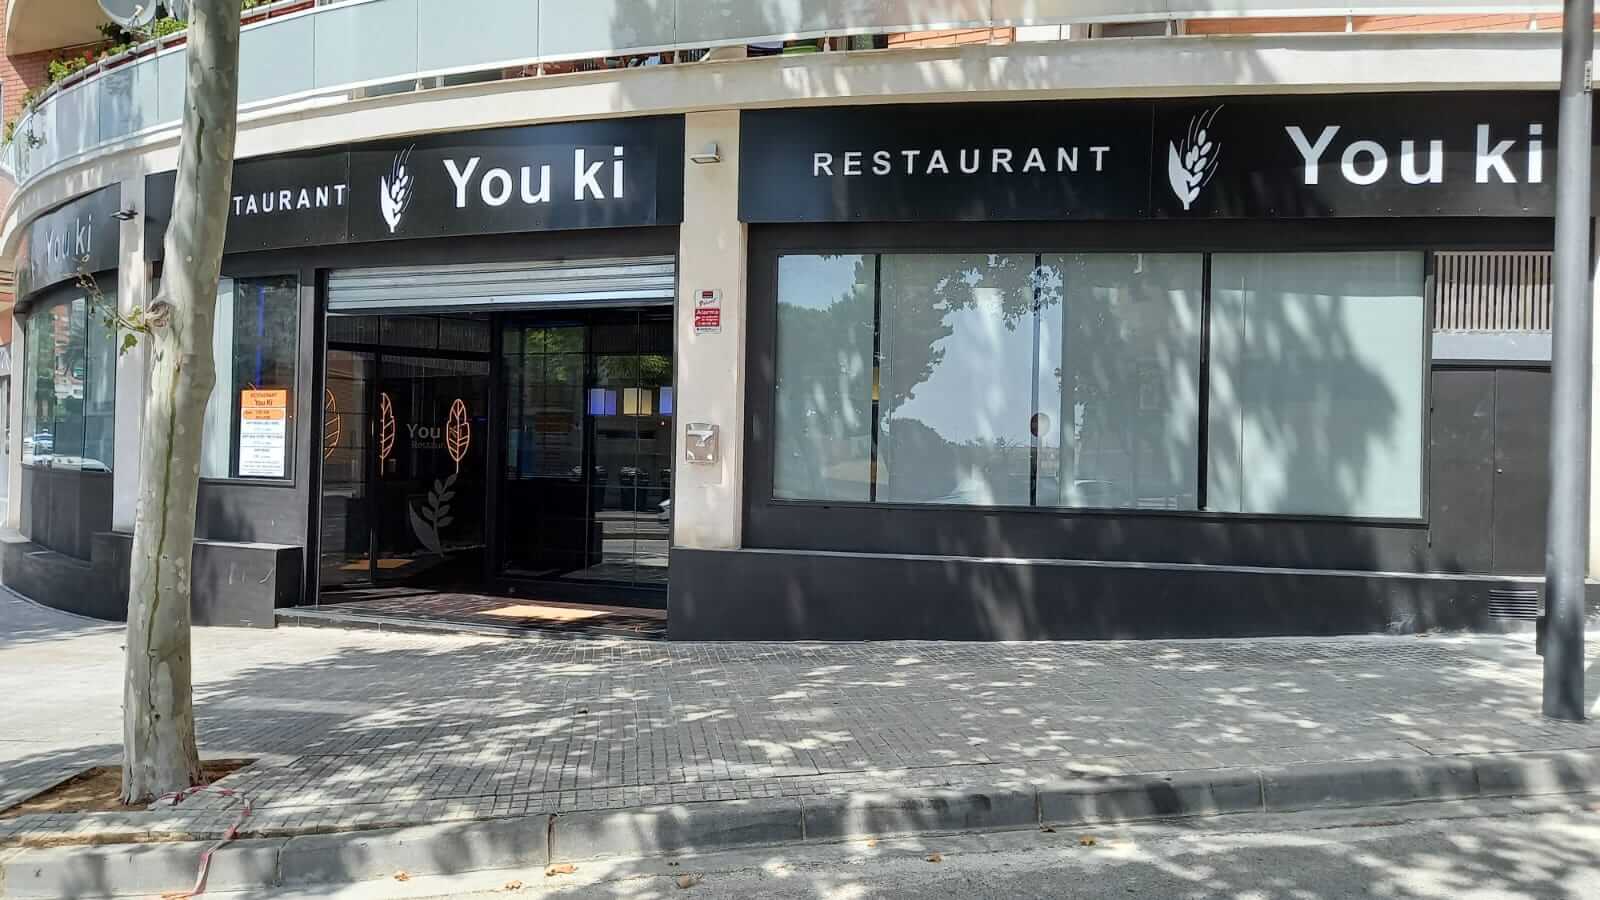 Restaurant You ki